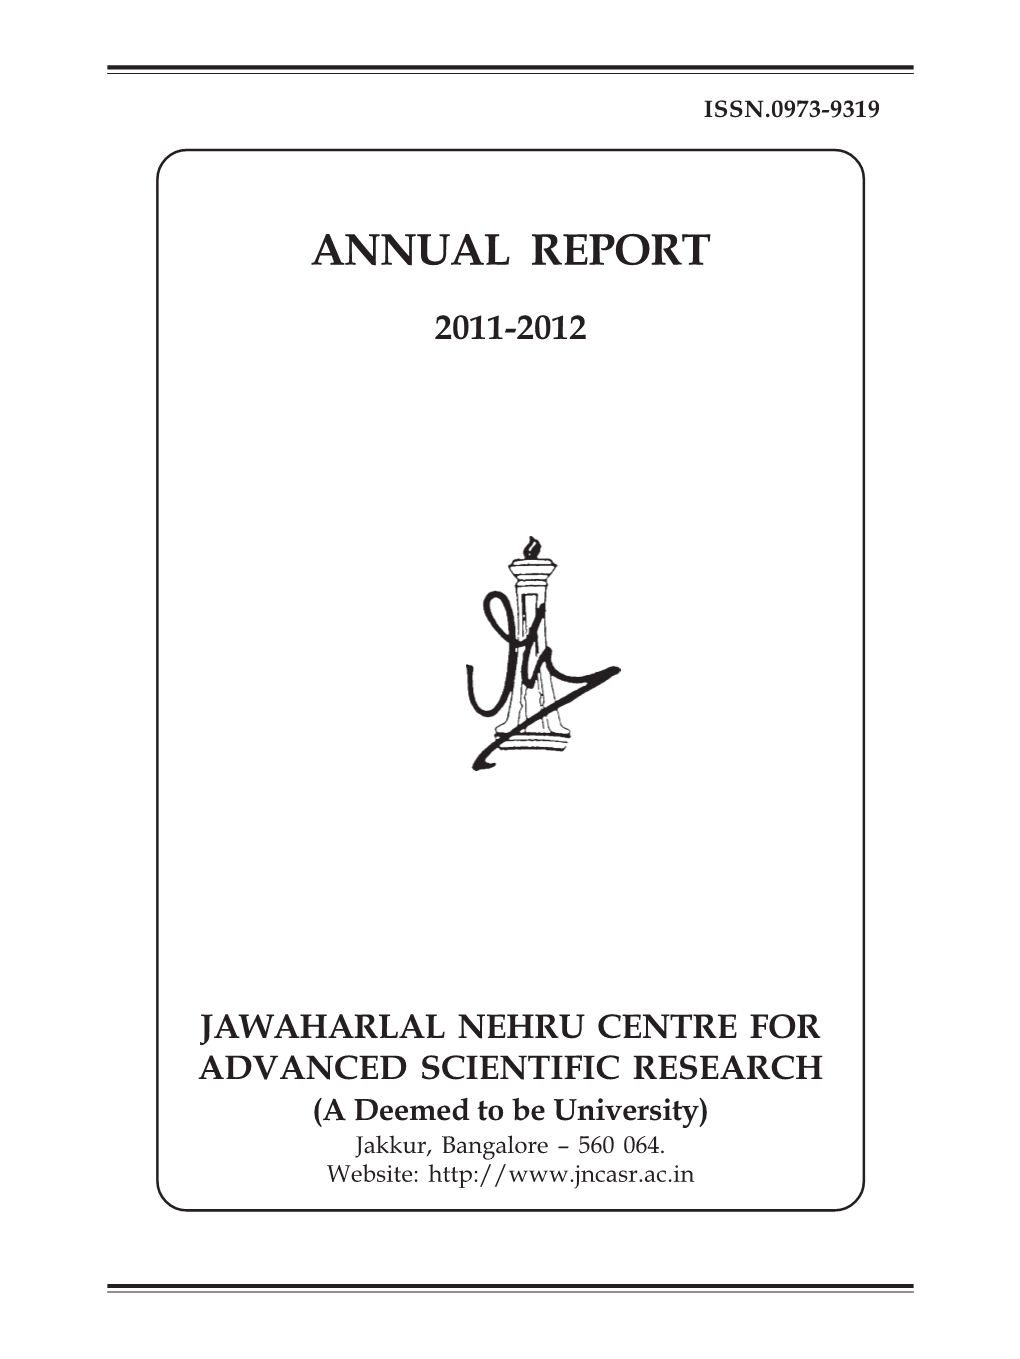 Jawharalal Nehru Annual Rep-2011-12